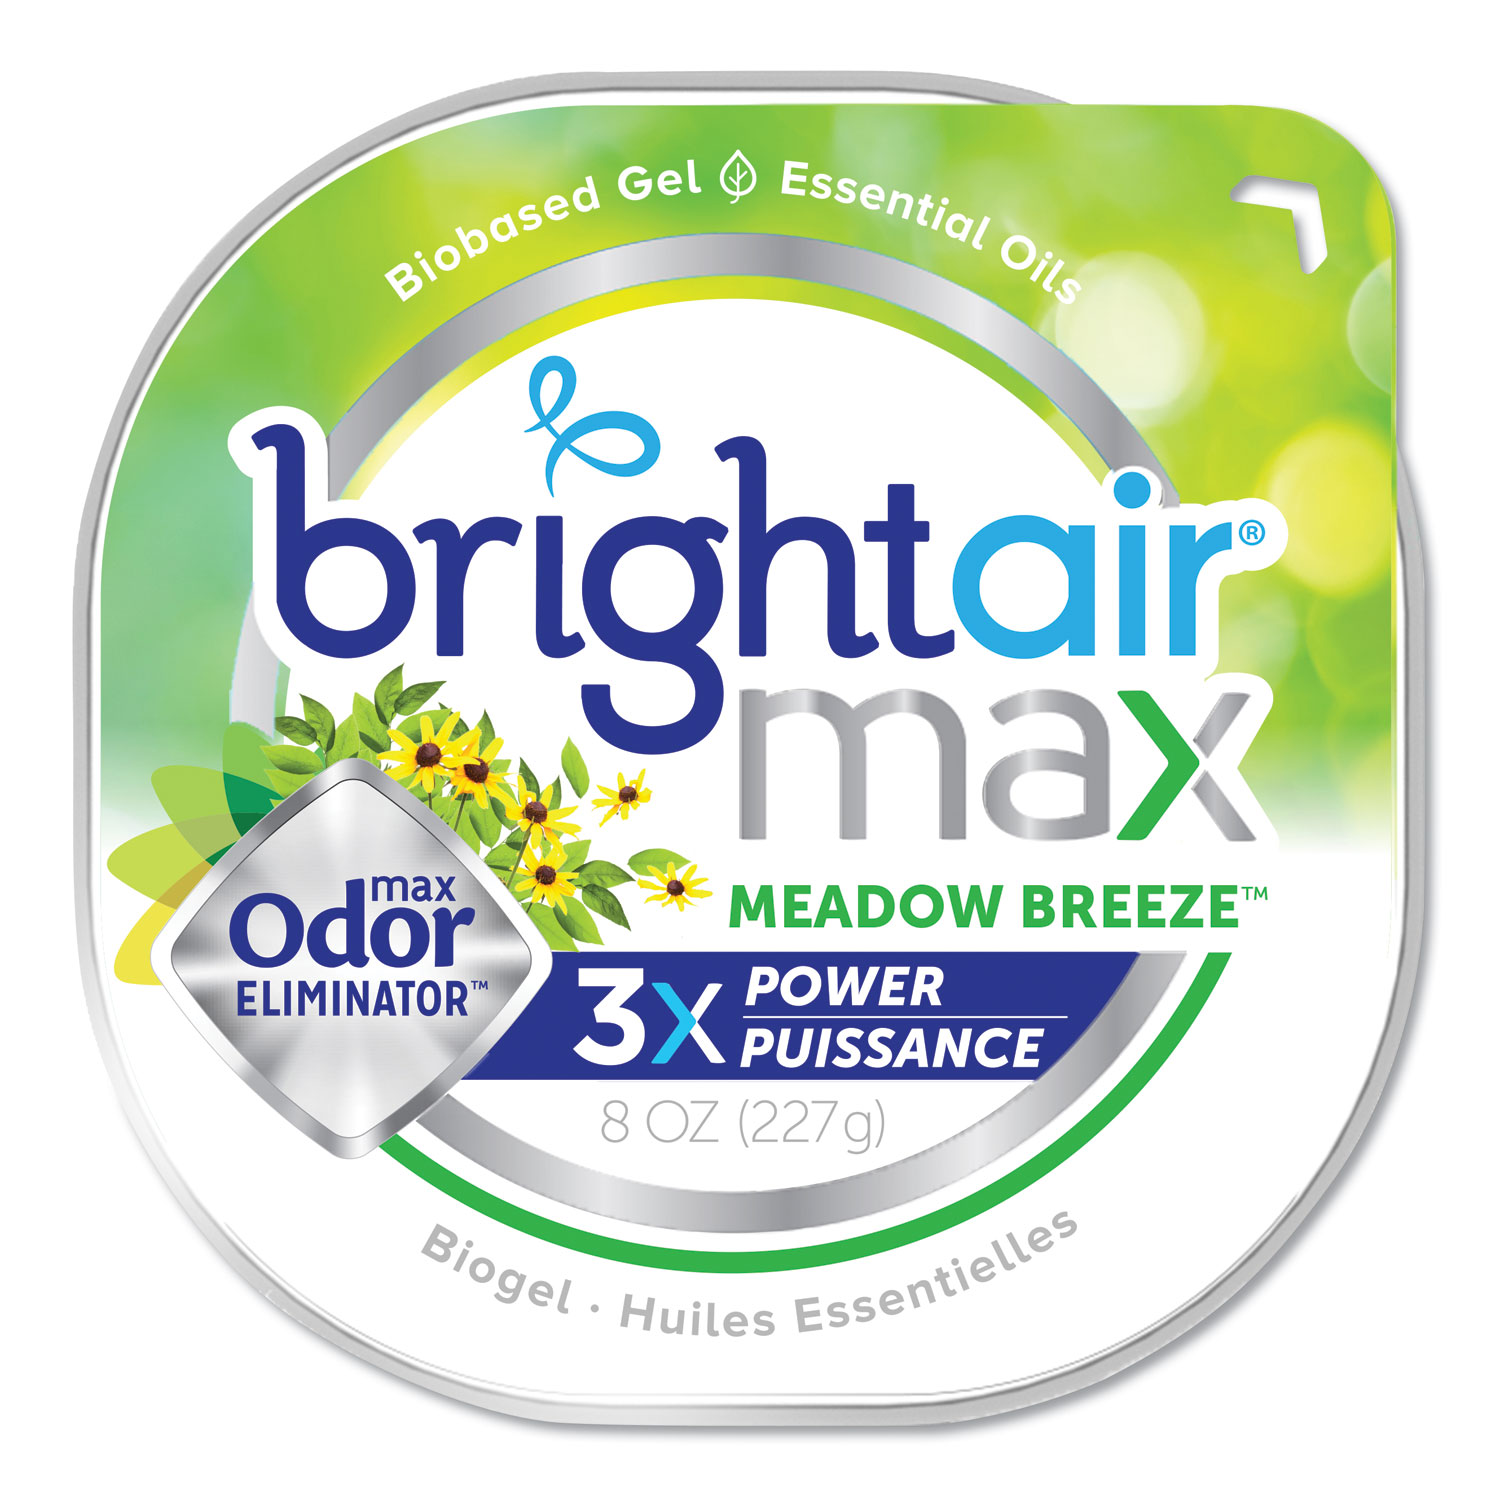 Max Odor Eliminator Air Freshener, Meadow Breeze, 8 oz, 6/Carton